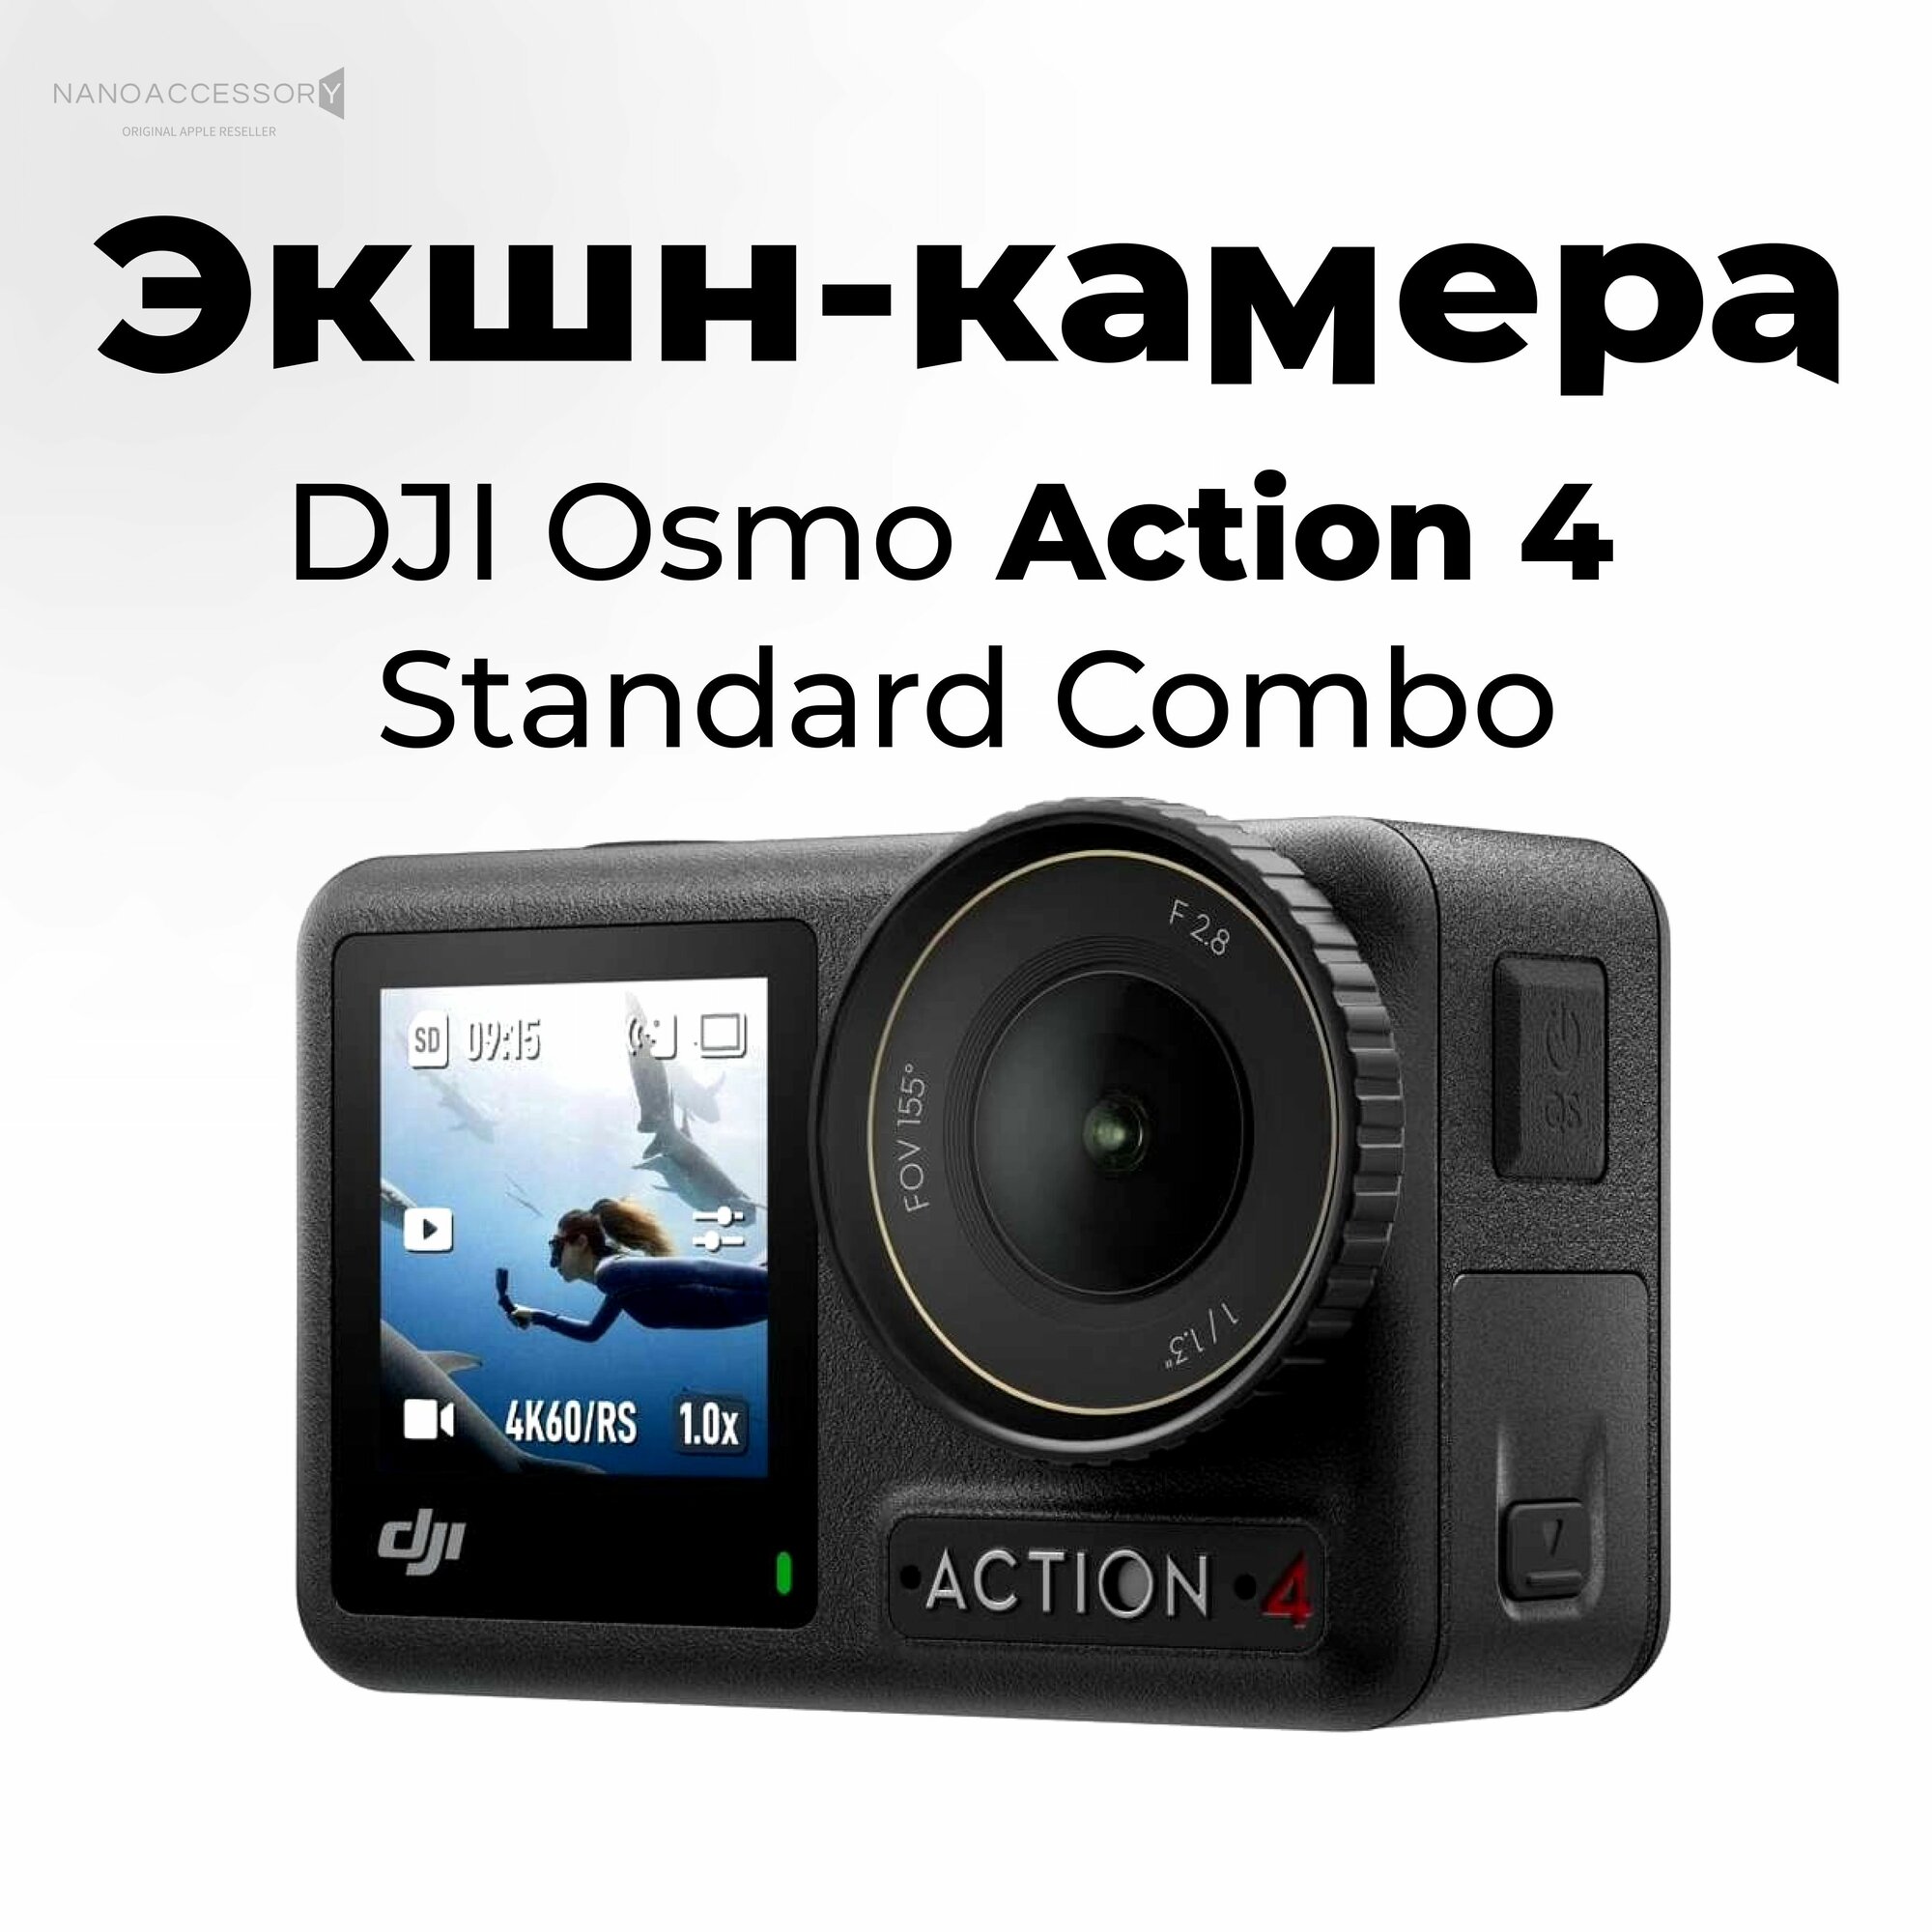 DJI Экшн-камера Osmo Action 4 Standard Combo. Спортивная камера подходит для Vlog.